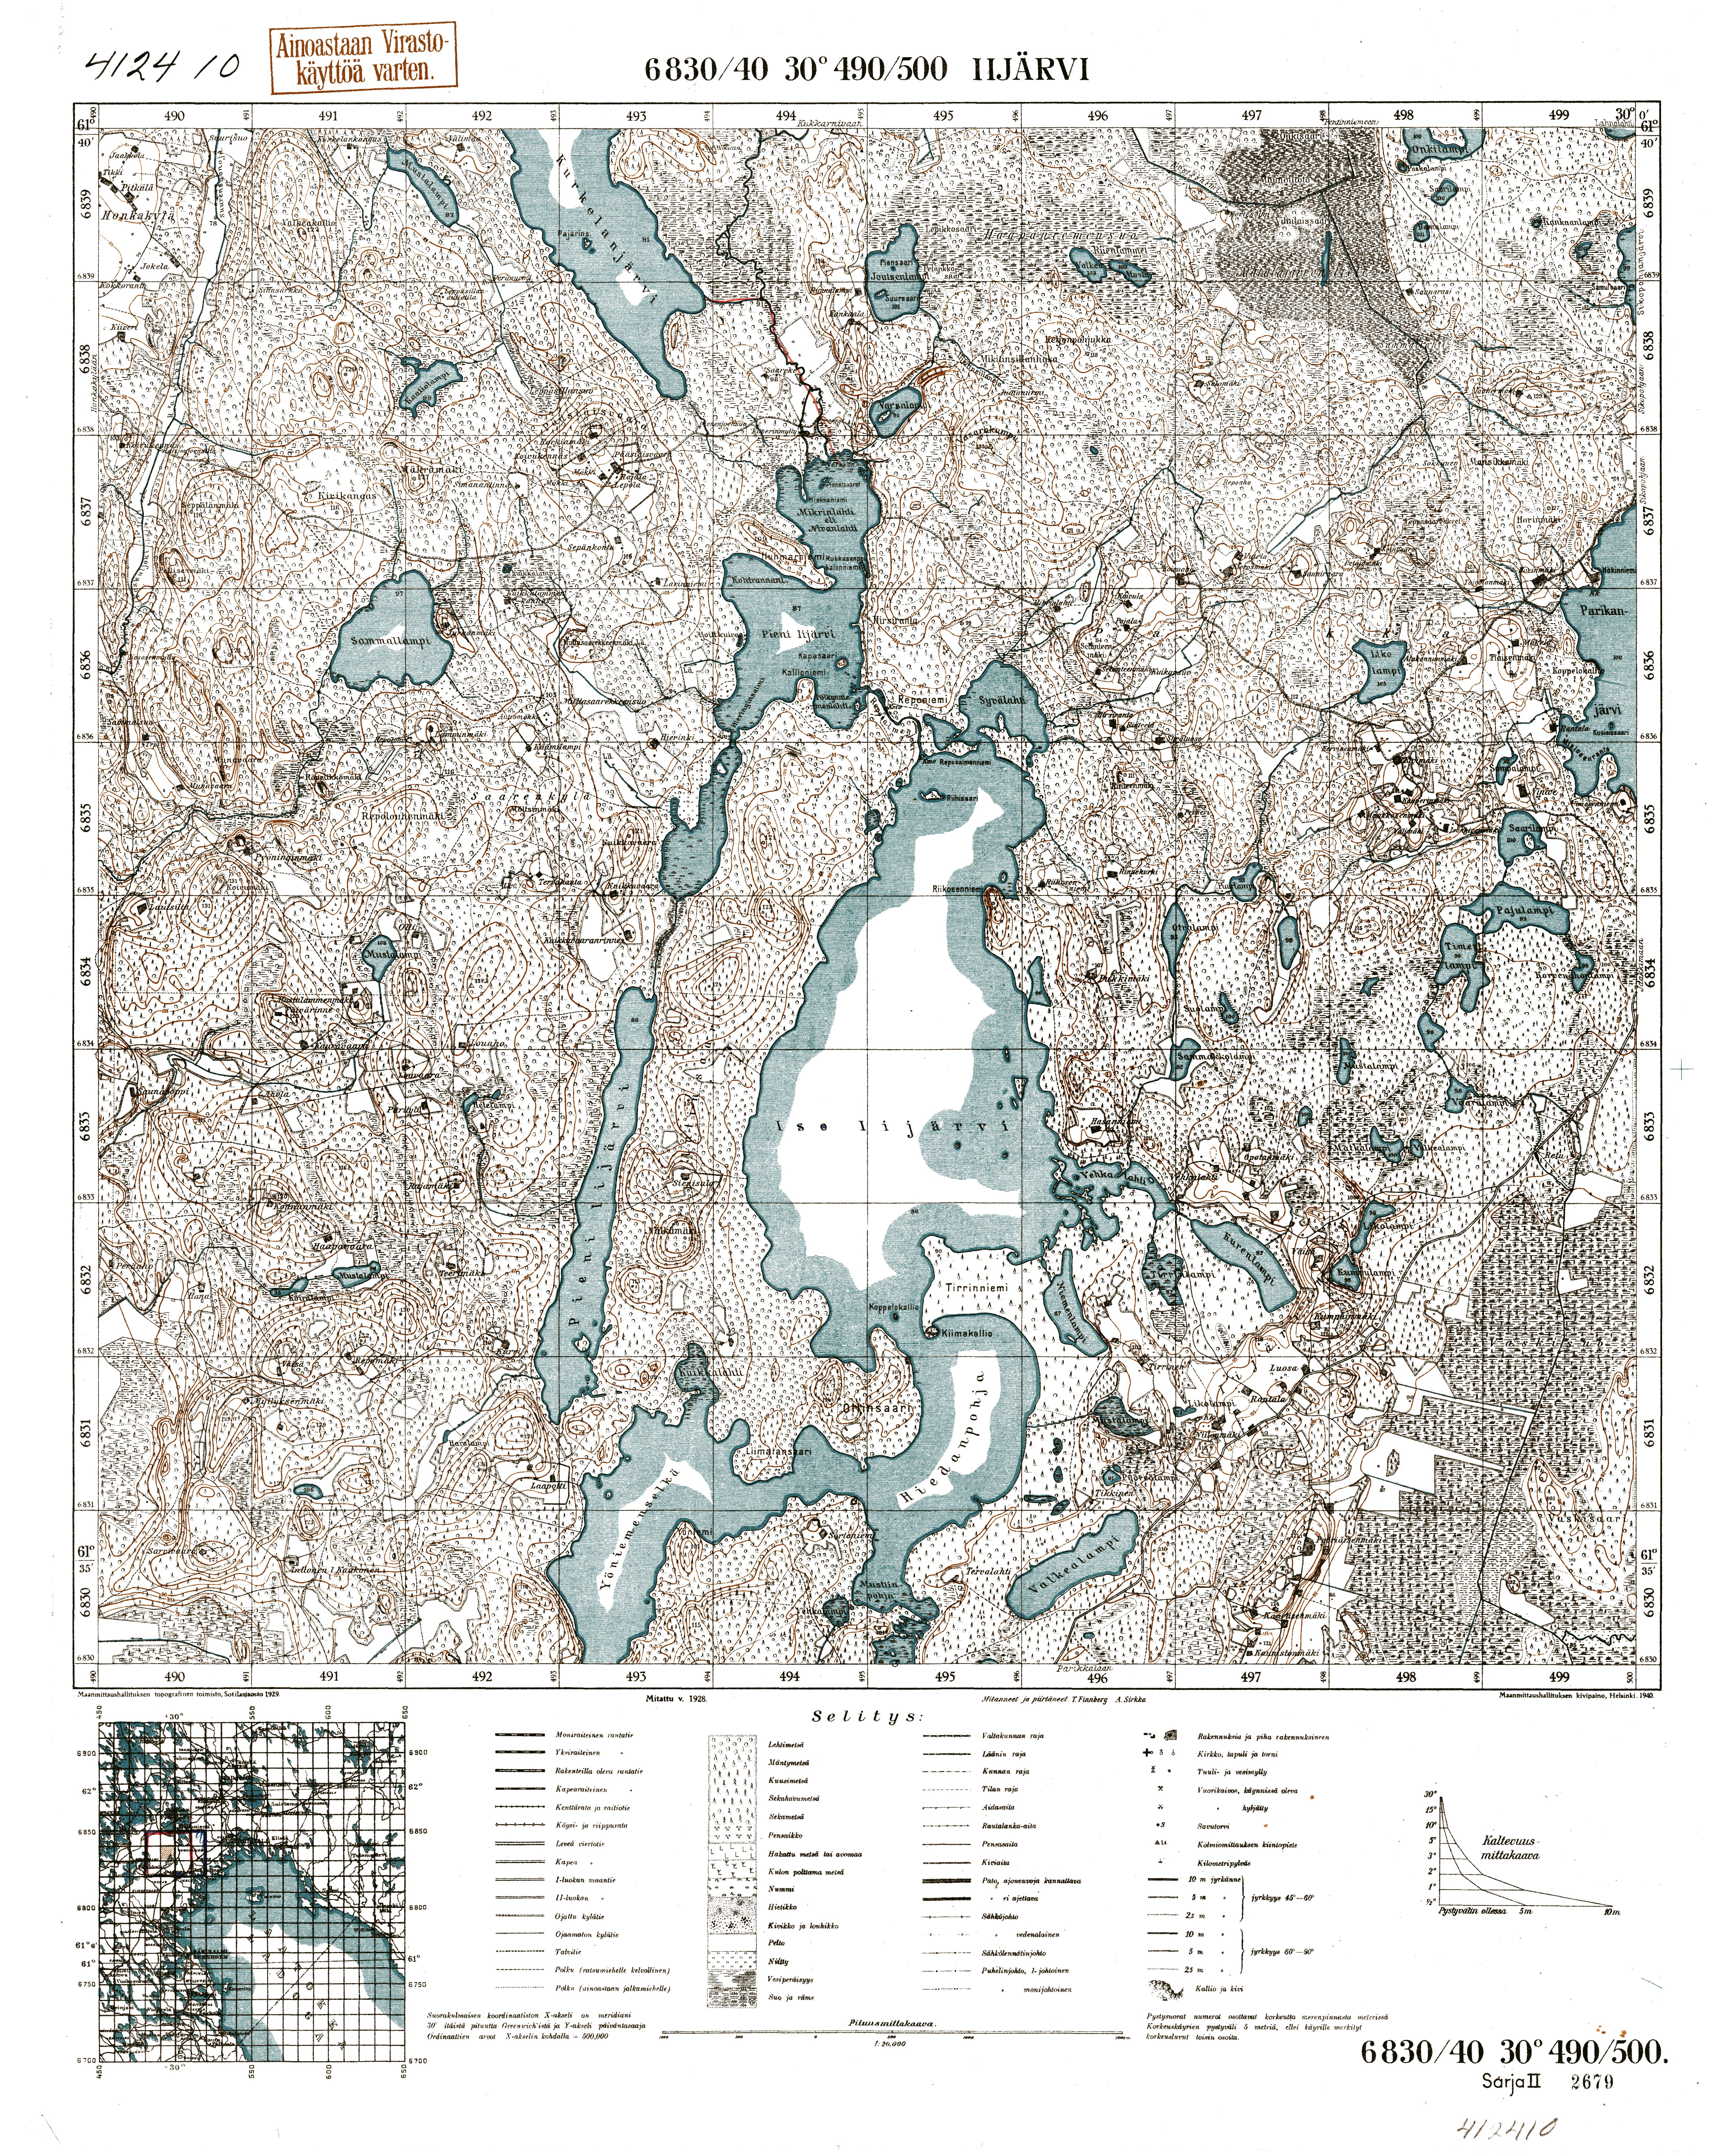 Izo-Iijarvi, Pieni-Iijarvi Lakes. Iijärvi. Topografikartta 412410. Topographic map from 1940